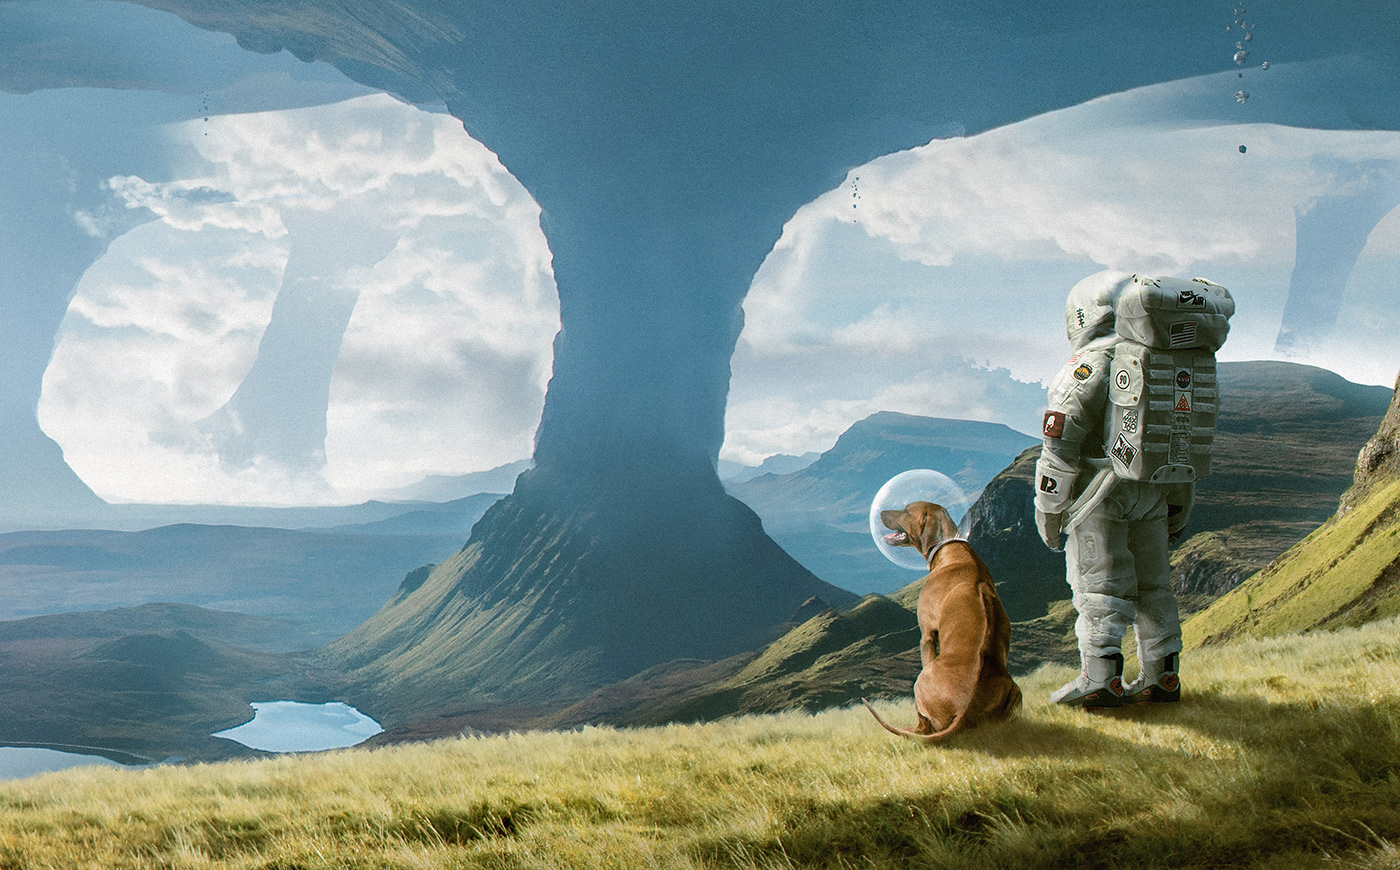 cosmic cosmos astronaut dog planet surreal photomanipulation freedom friendship adventure